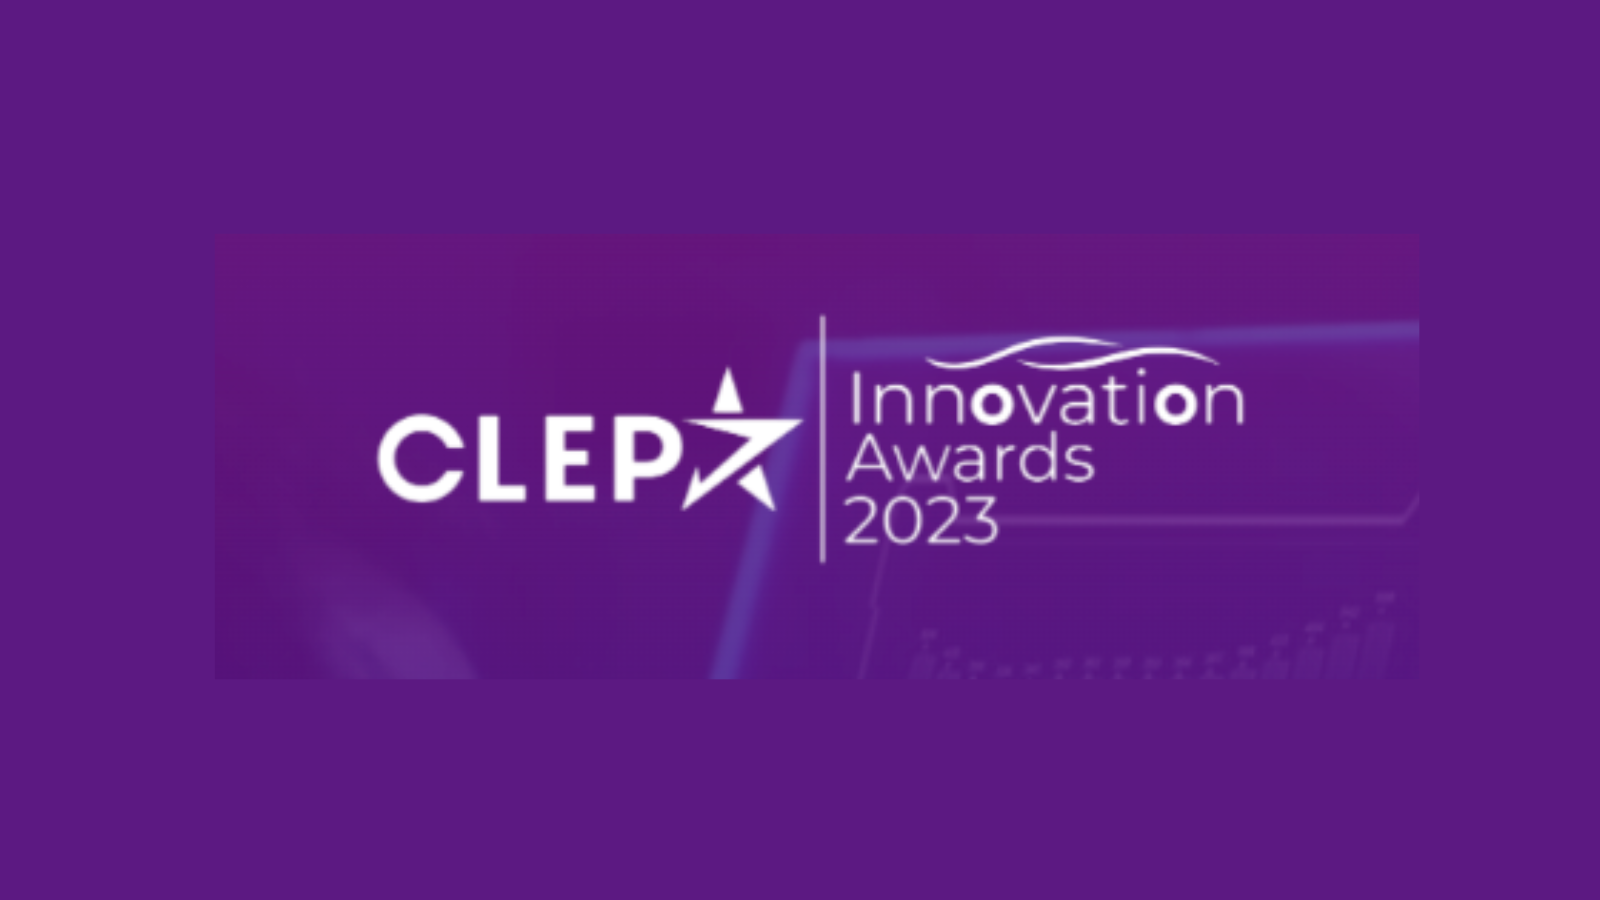 CLEPA Innovation Awards 2023